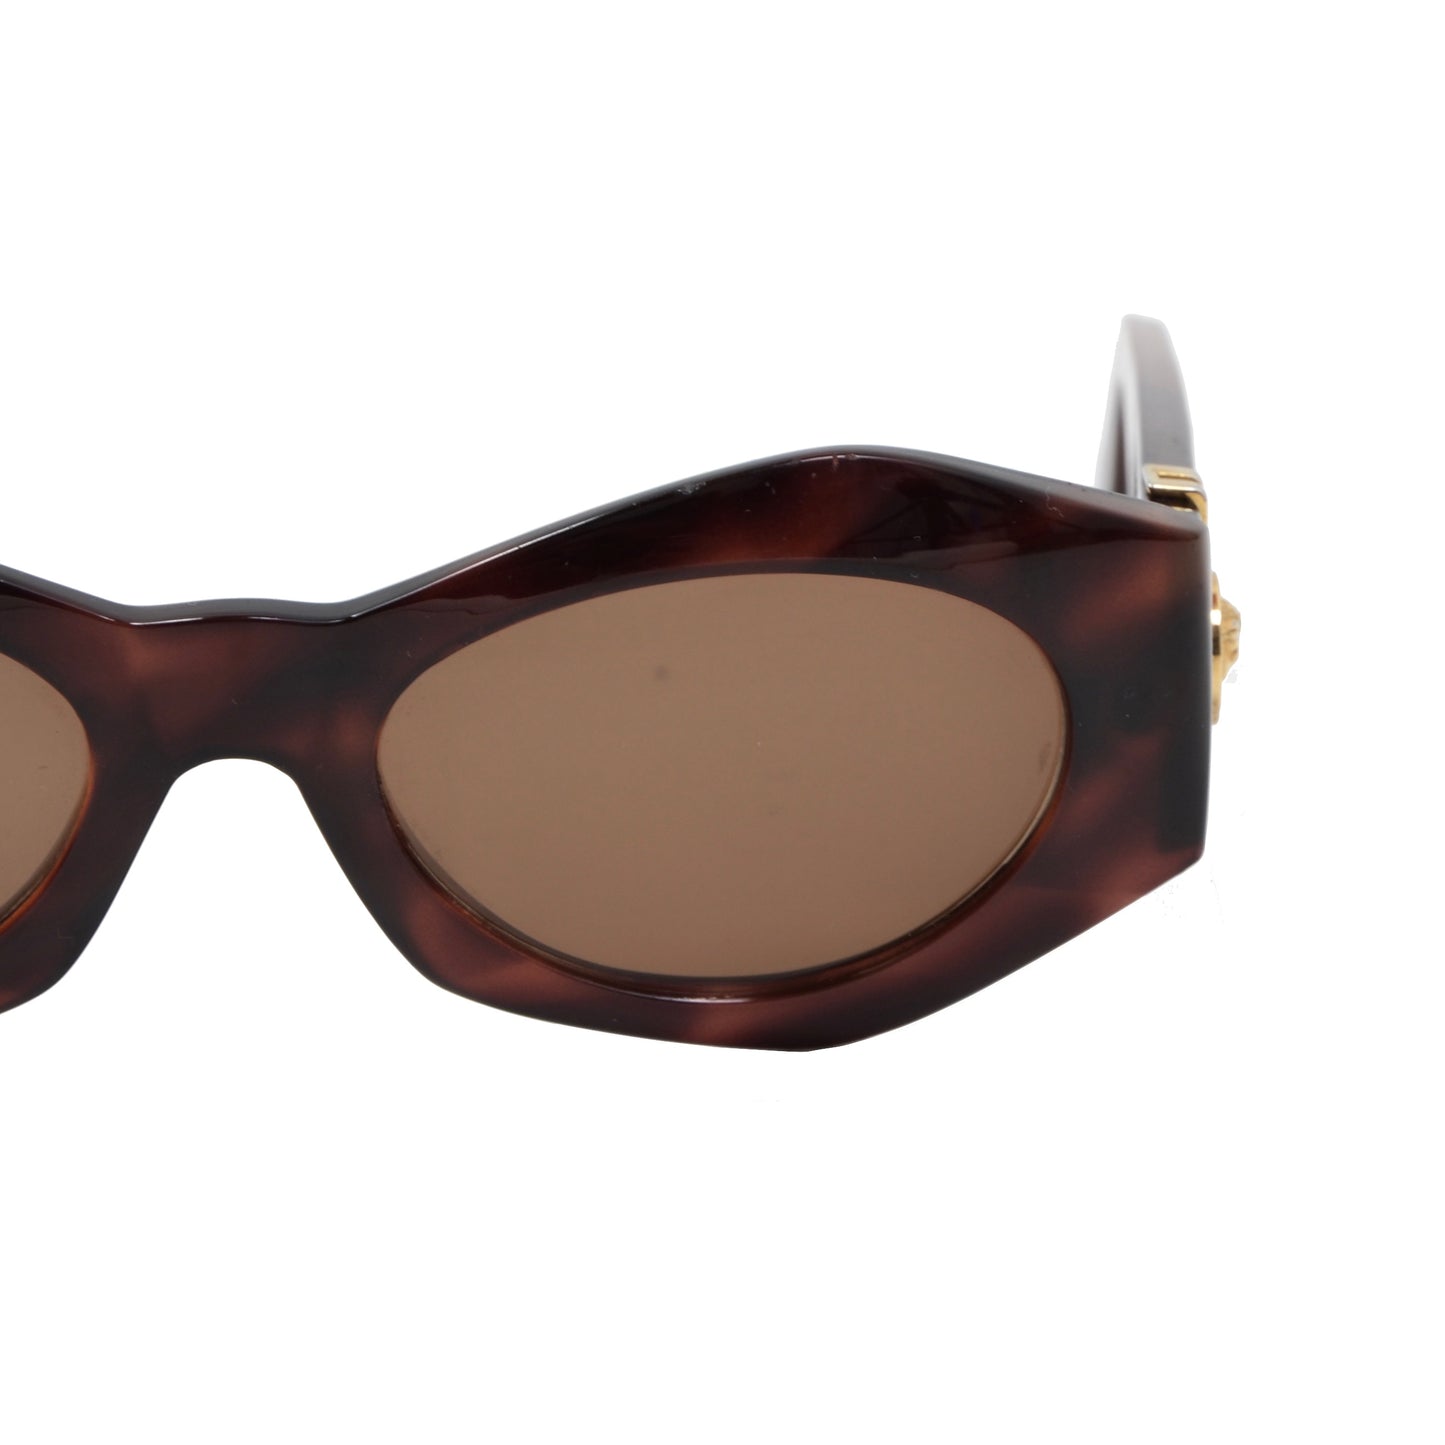 Vintage Gianni Versace Sunglasses Mod. 422 Col. 900 - Tortoise